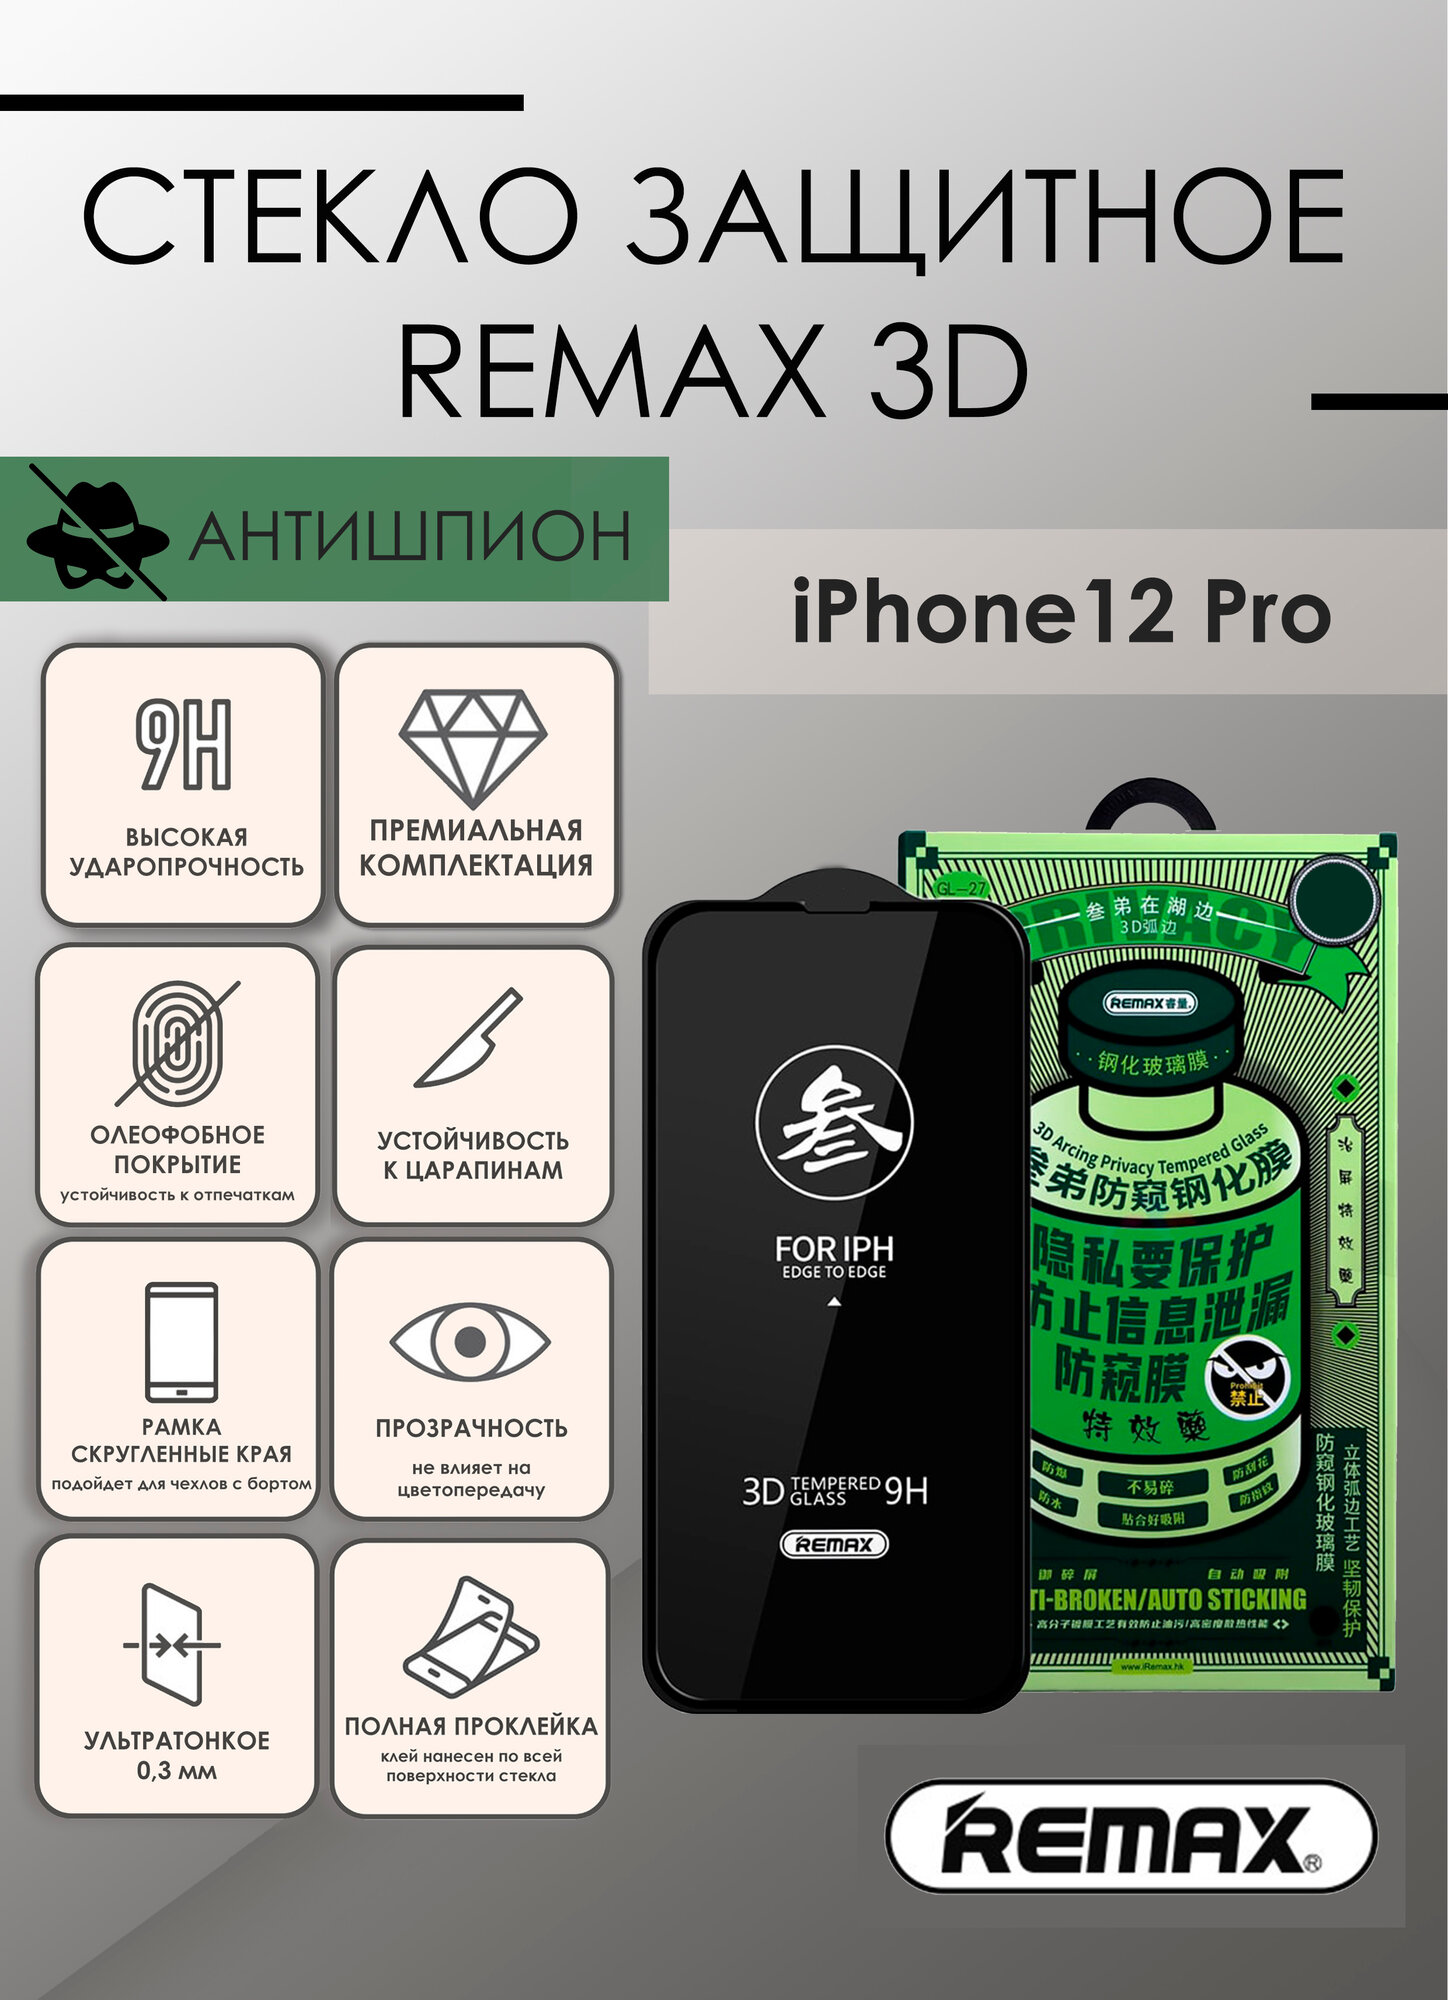 Защитное Глянцевое стекло Remax антишпион для Apple iPhone 12 / 12 Pro 6.1" / бронь противоударная от сколов, царапин на экран айфона 12/12 про